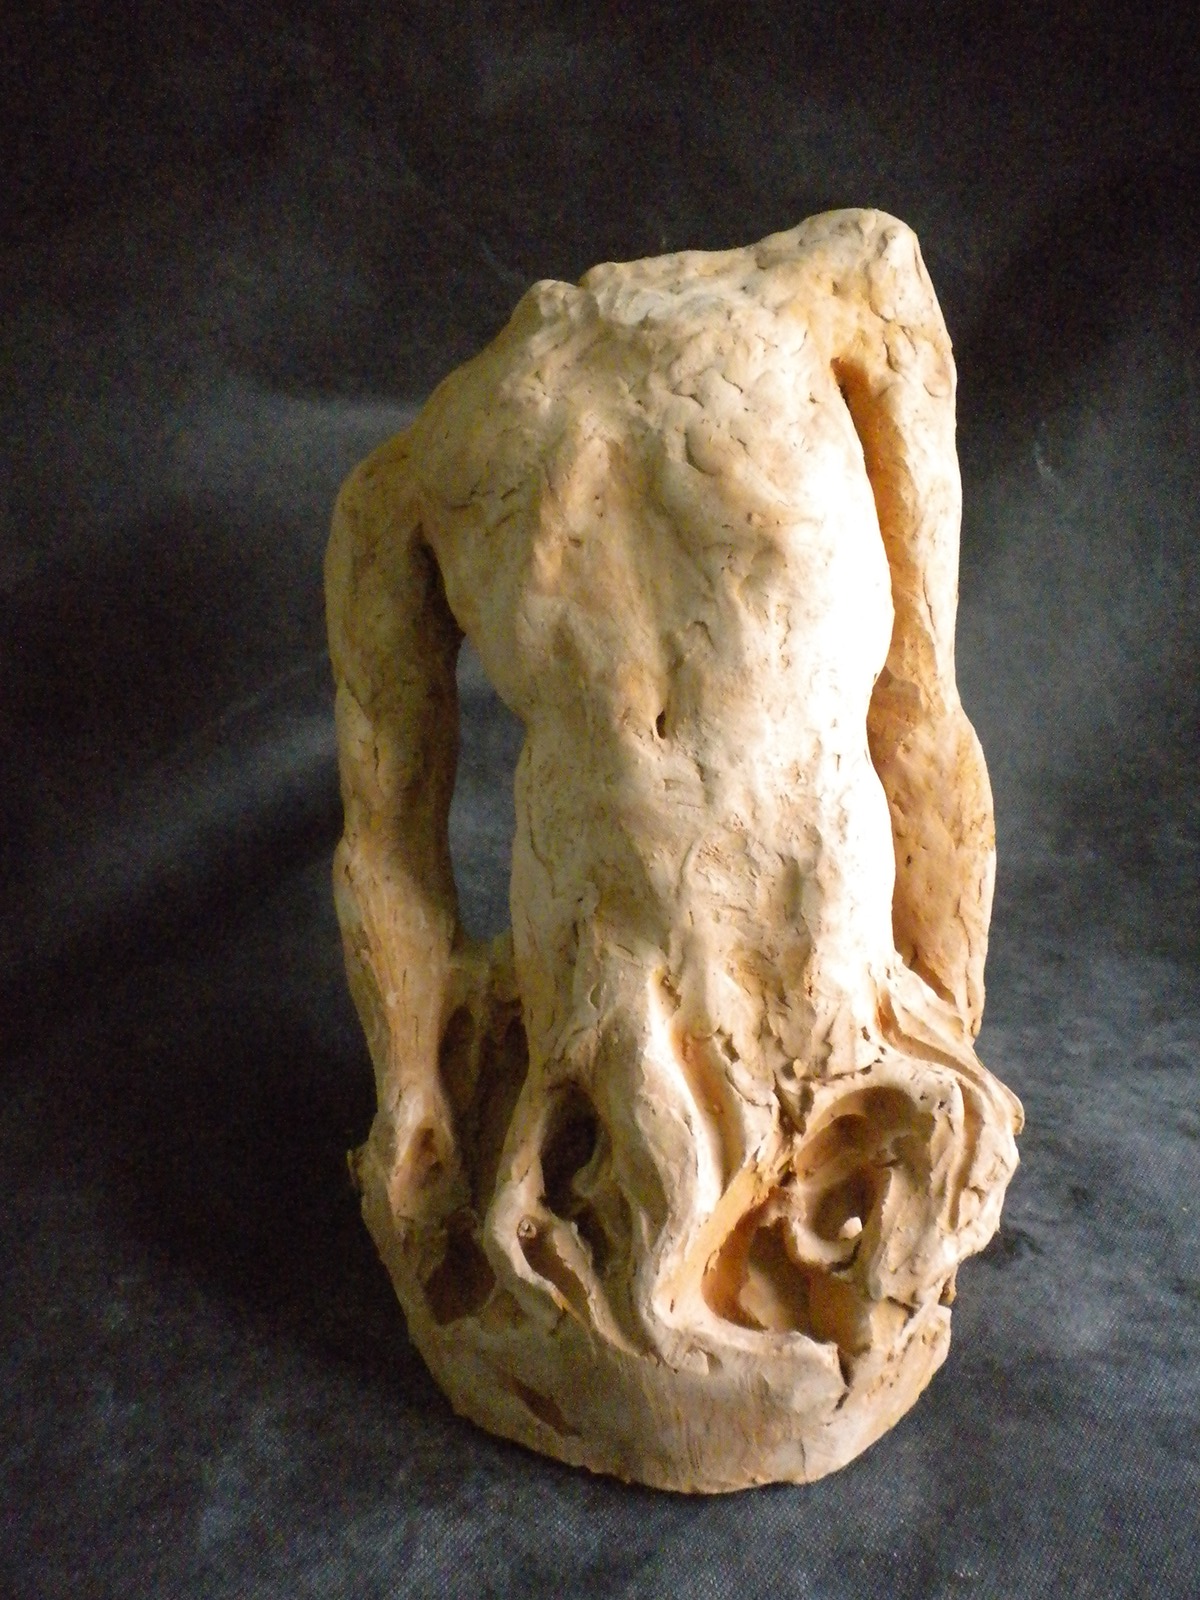 eco root man uomo radica pain anguish angoscia dolore sculpture scultura clay creta